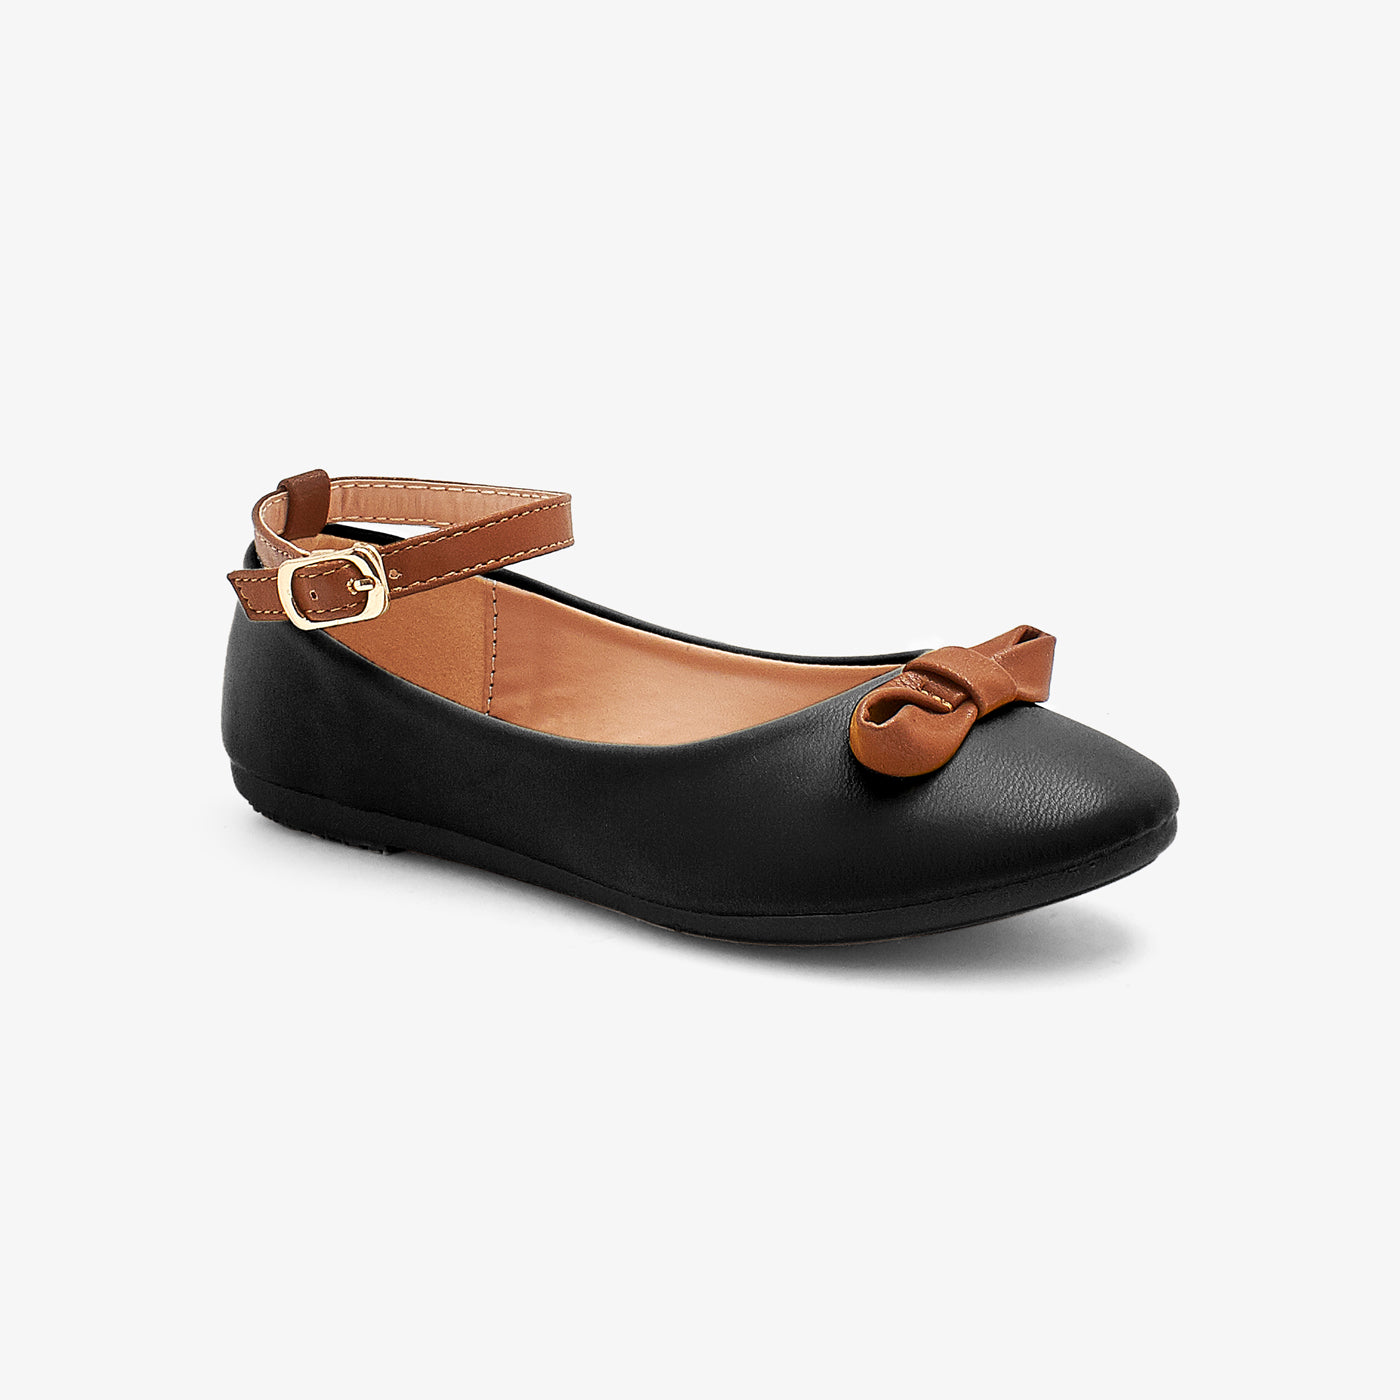 Ndure sandals for girls